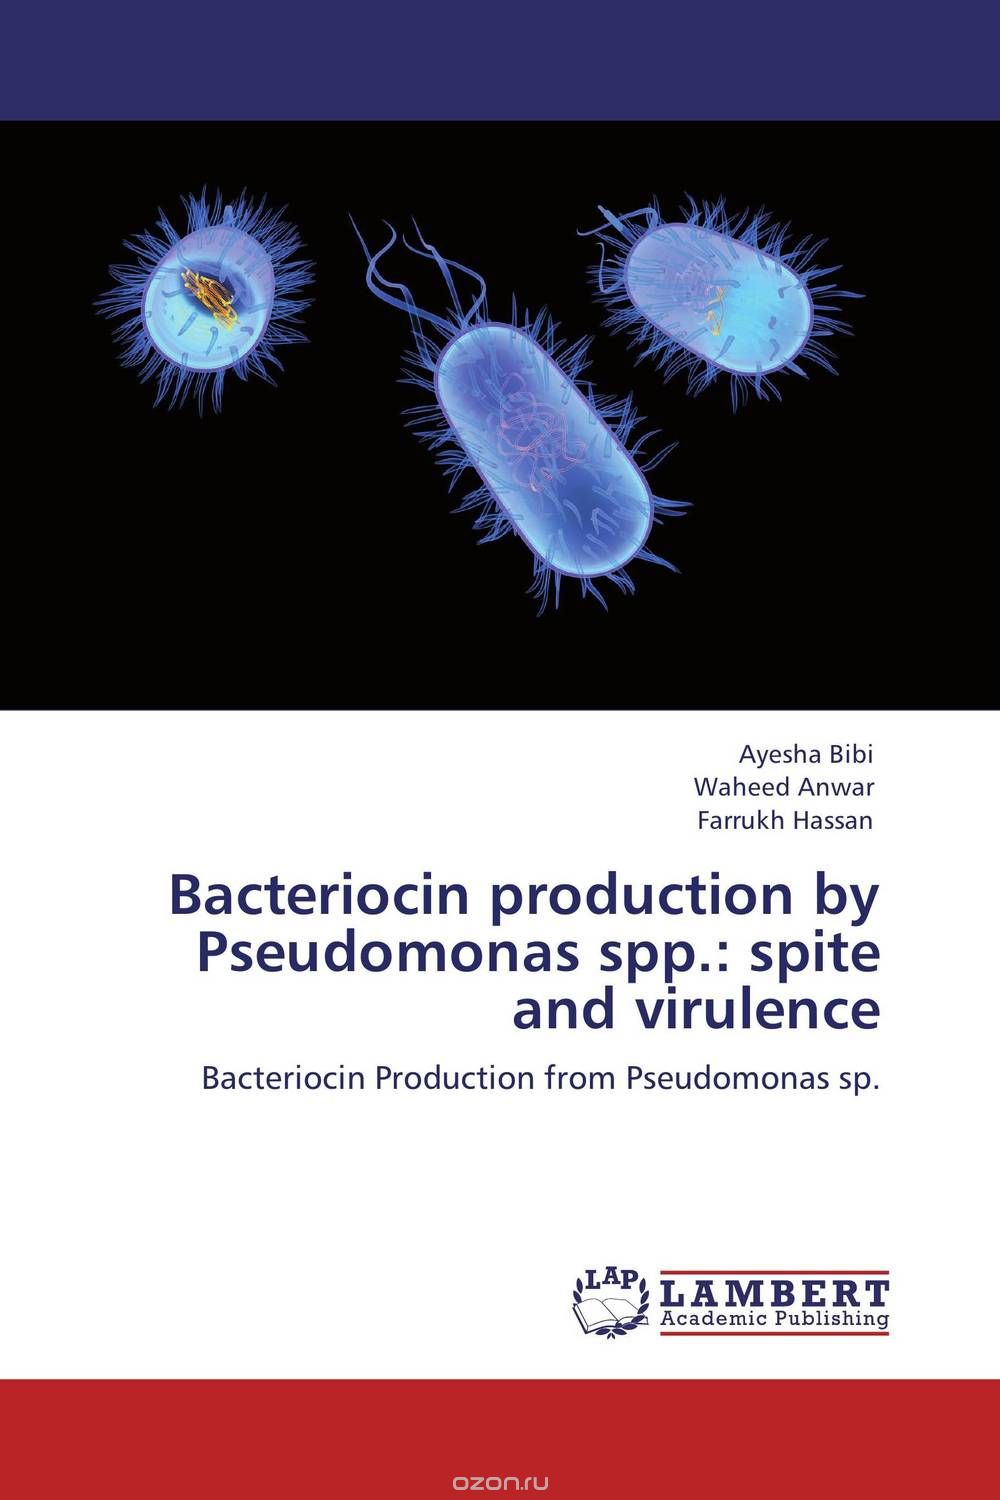 Скачать книгу "Bacteriocin production by Pseudomonas spp.: spite and virulence"